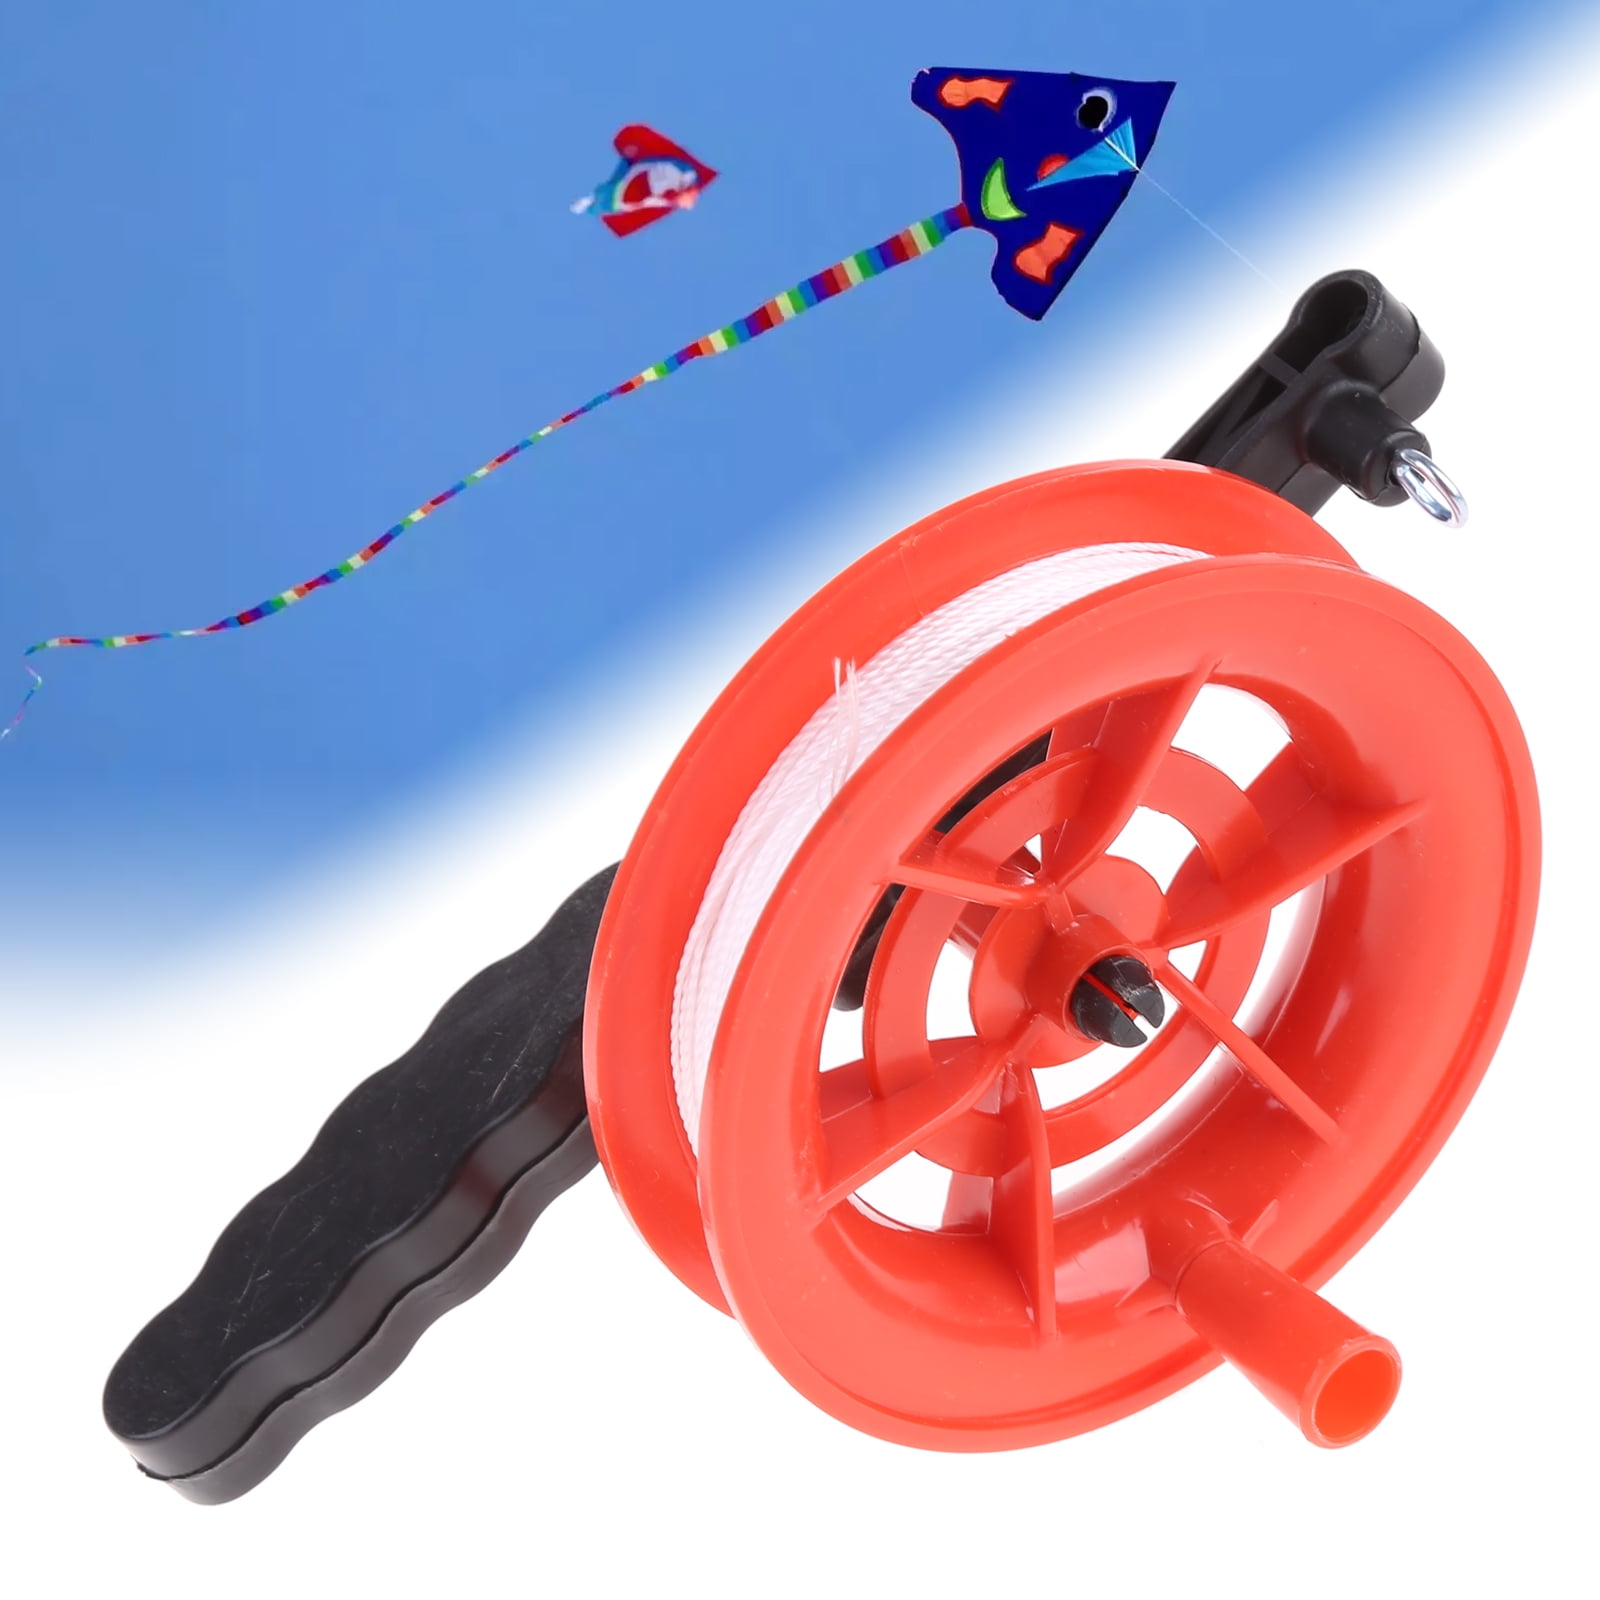 60M Reel Handle Line String Winder Outdoor Ball Bearing Wheel Kite Winder Tool 